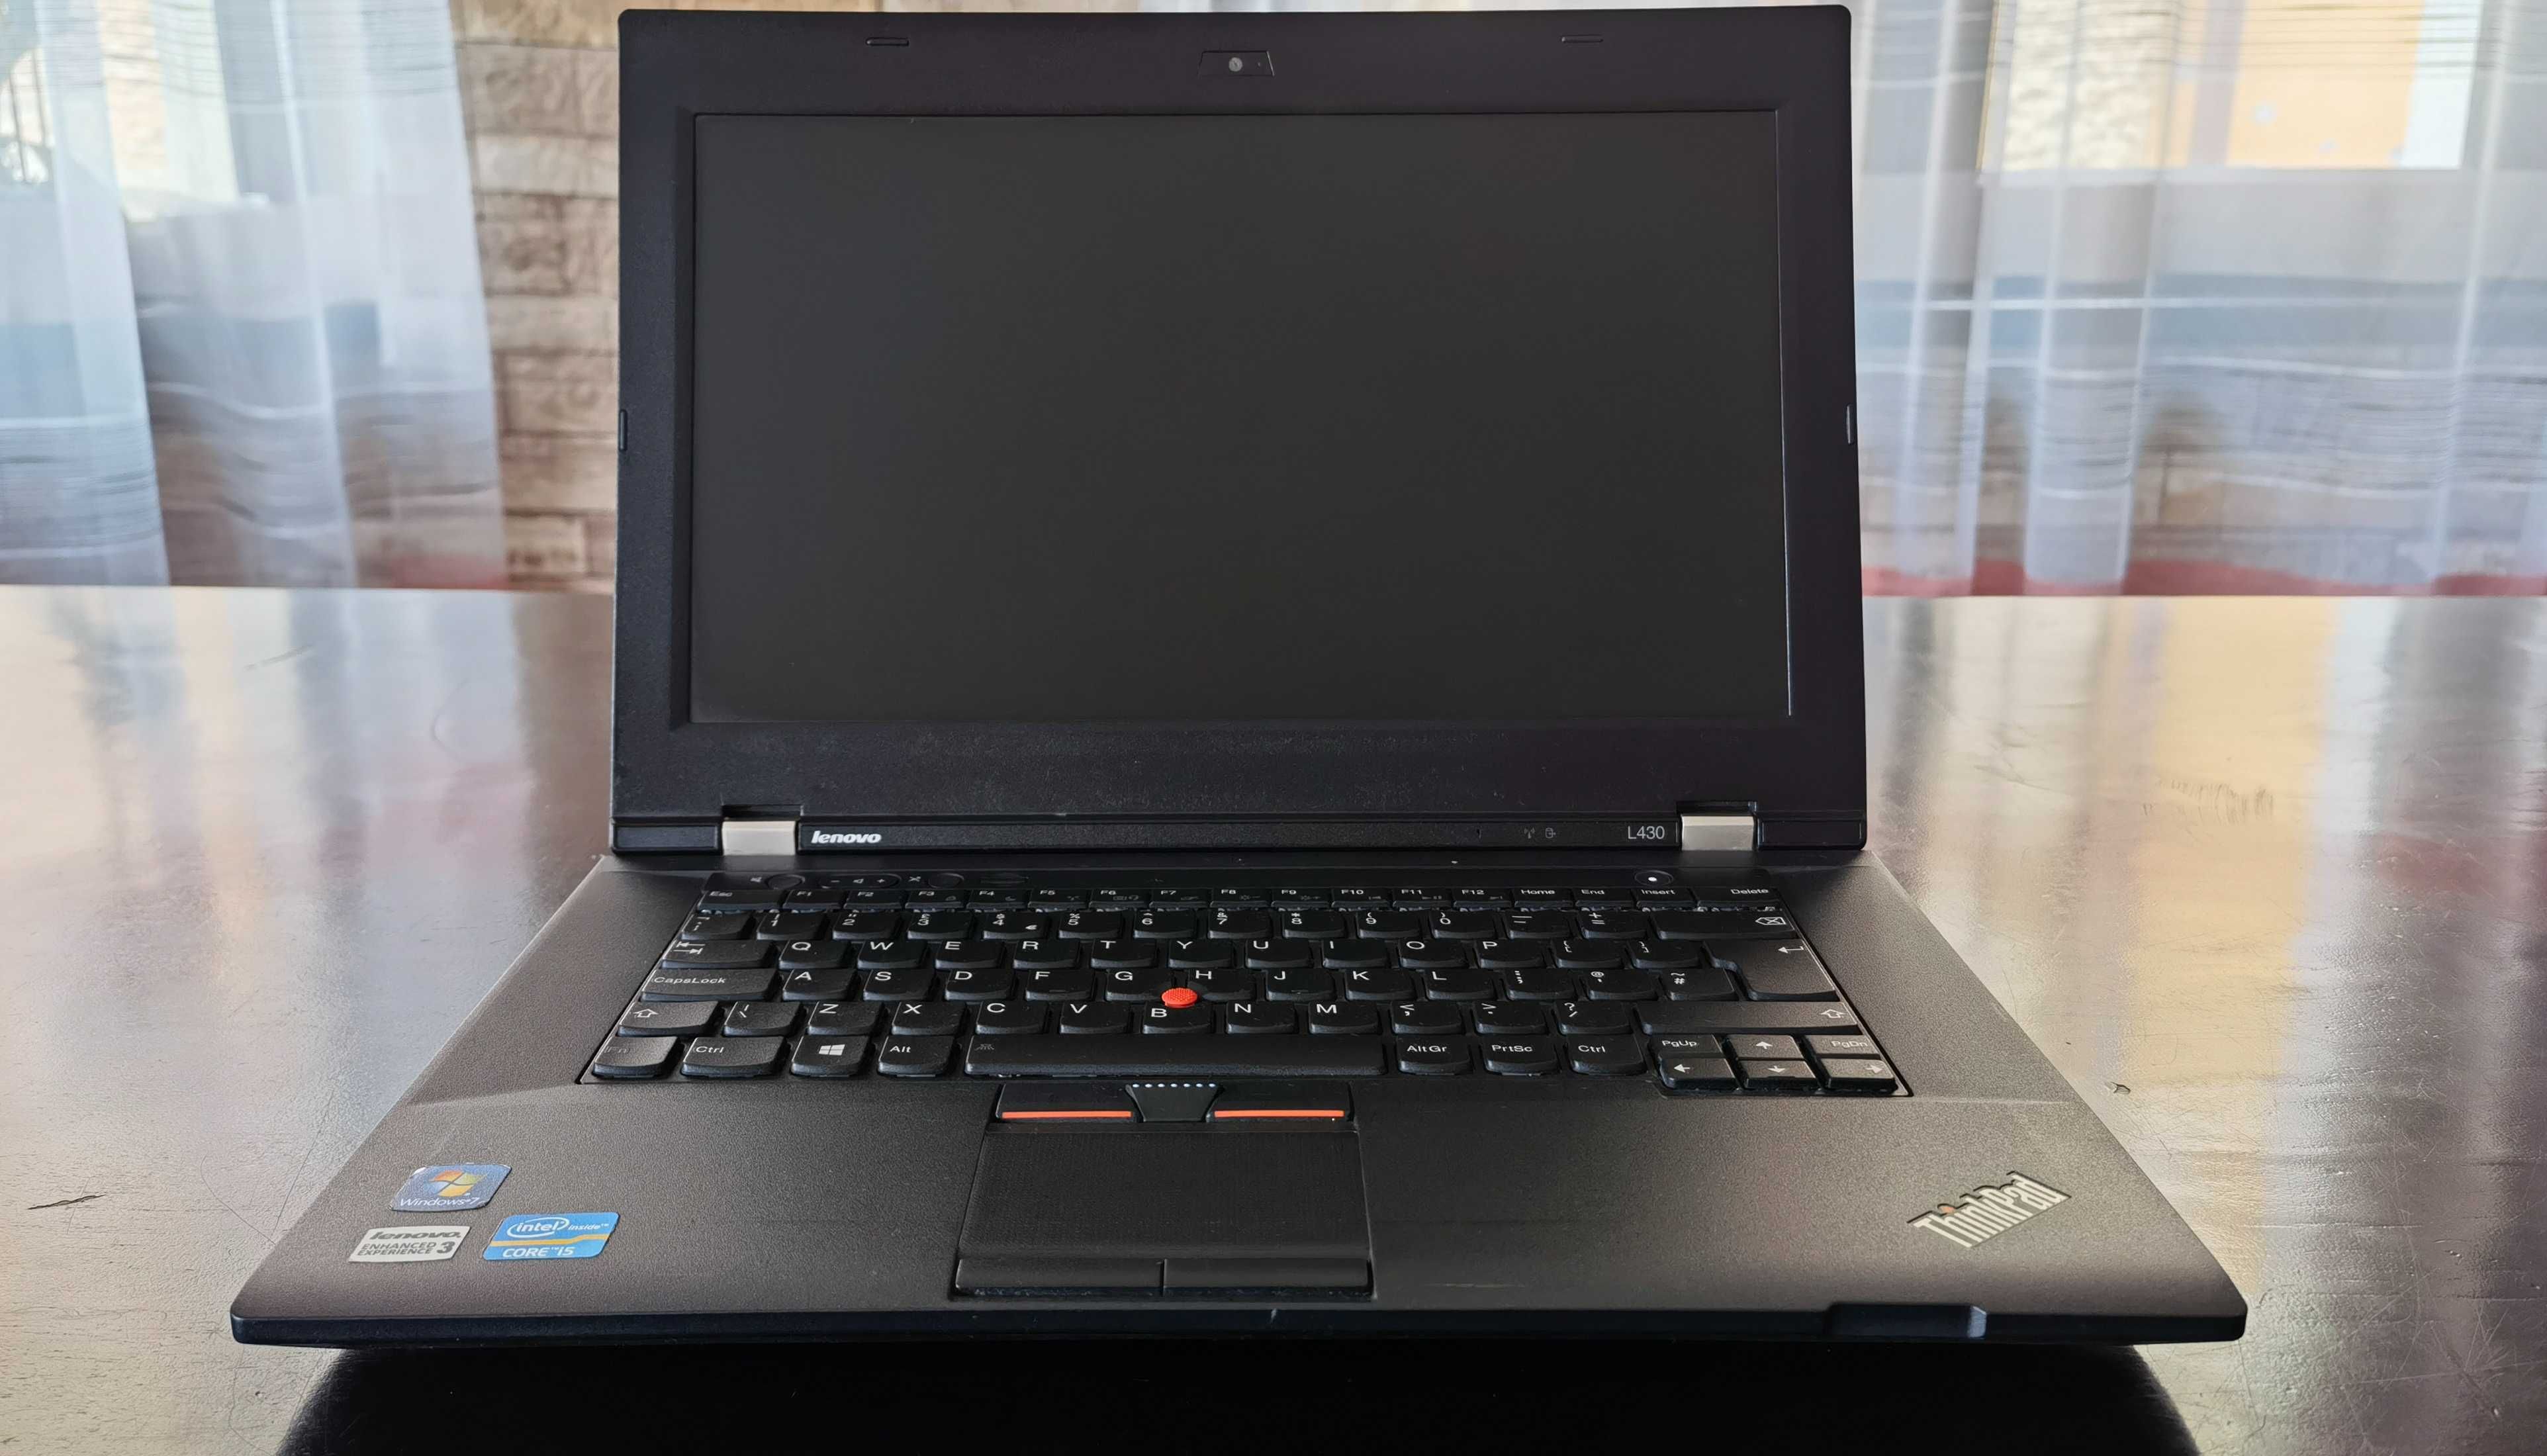 Lenovo ThinkPad L430/4x2.6ghzThr/мат14сКам/4gb/320gb/4ч.Бат/DVDrw/Проф